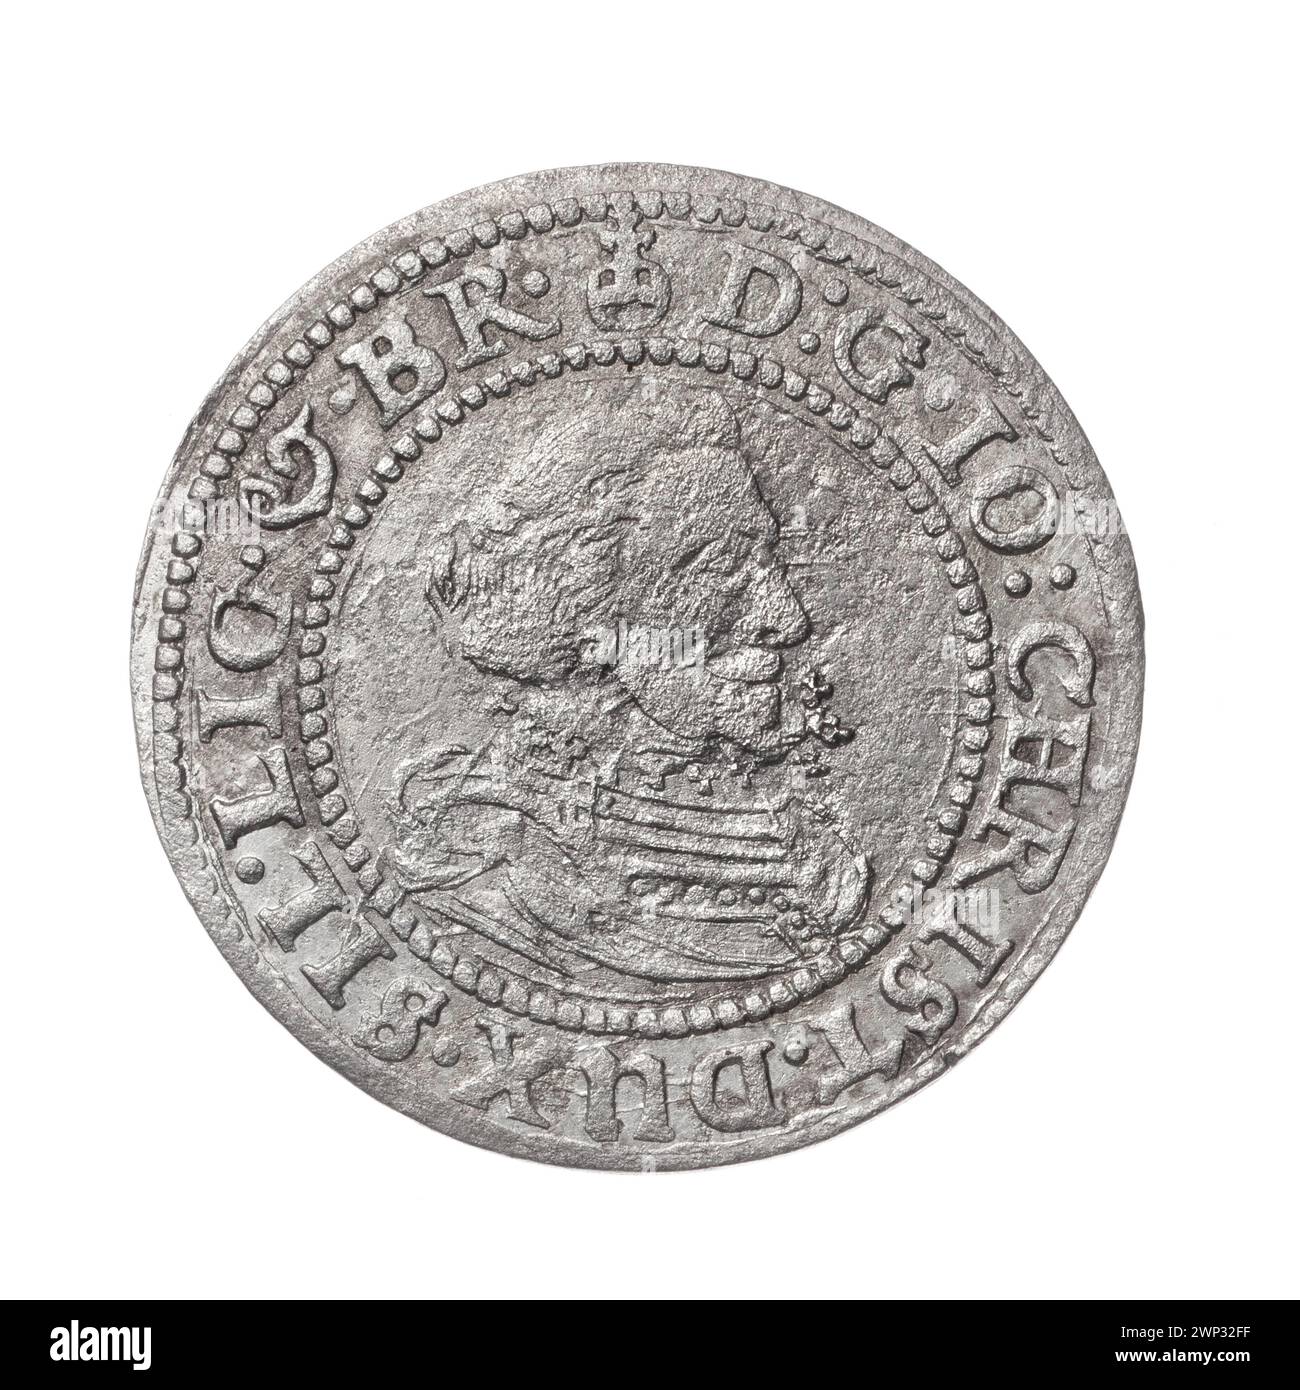 24 Krajcary; Jan Christian (KSI  Legnica-Brzeski; 1591-1639), Rieger, Hans (1580-1653); 1622 (1622-00-00-1622-00-00);Jan Christian (Prince of Brest - 1591-1639), Jan Christian (Prince of Brest - 1591-1639) - iconography, Piastów (family), Duchy of Brest (coat of arms), Duchy of Legnica -Brzeskie (coat of arms), letters, letters H - r, Busters of the ruler, portraits, portraits in parade armor, four -track coat of arms, shields, coat of arms, coat of arms at Mitra Książęca Stock Photo